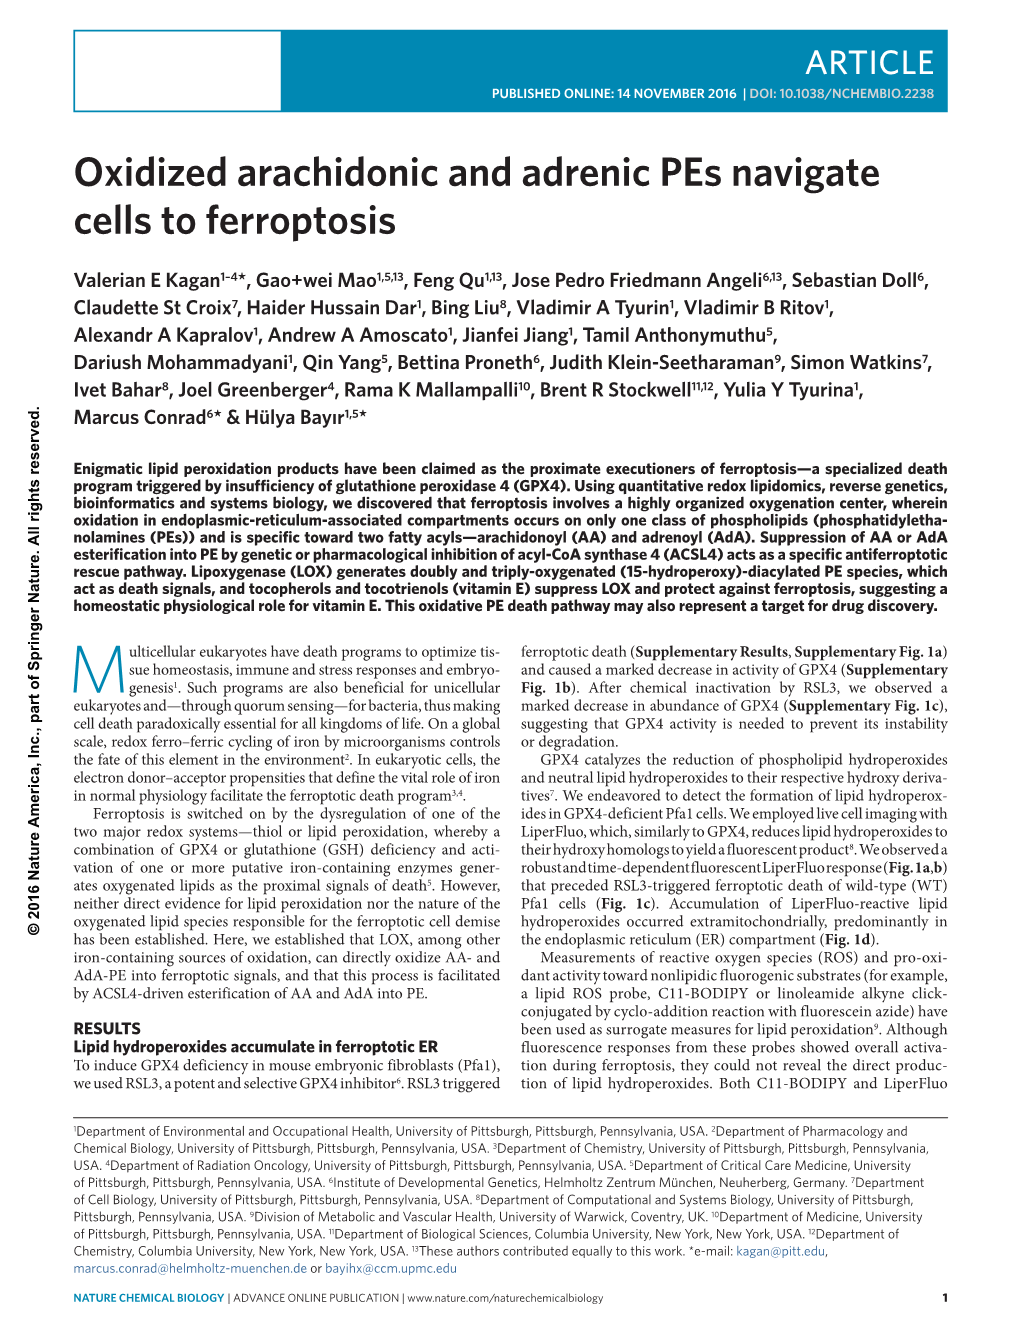 Oxidized Arachidonic and Adrenic Pes Navigate Cells to Ferroptosis